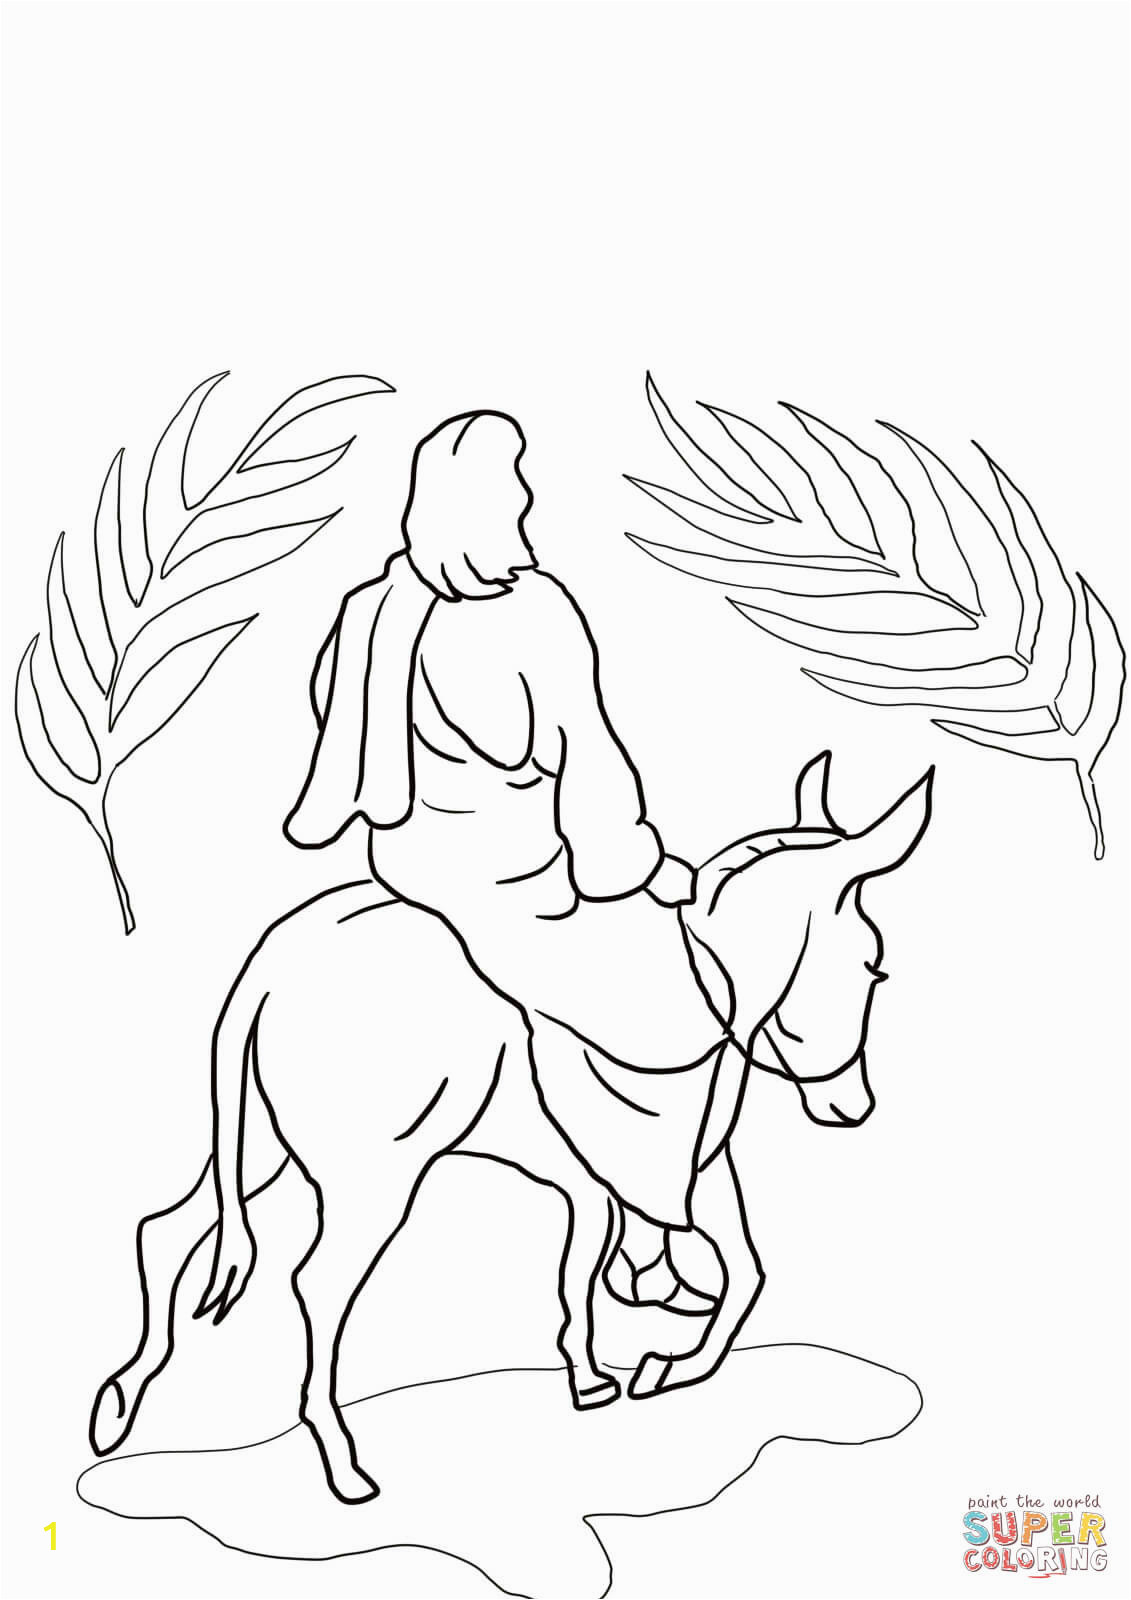 Jesus Riding On A Donkey Coloring Page Jesus Riding On A Donkey Coloring Page